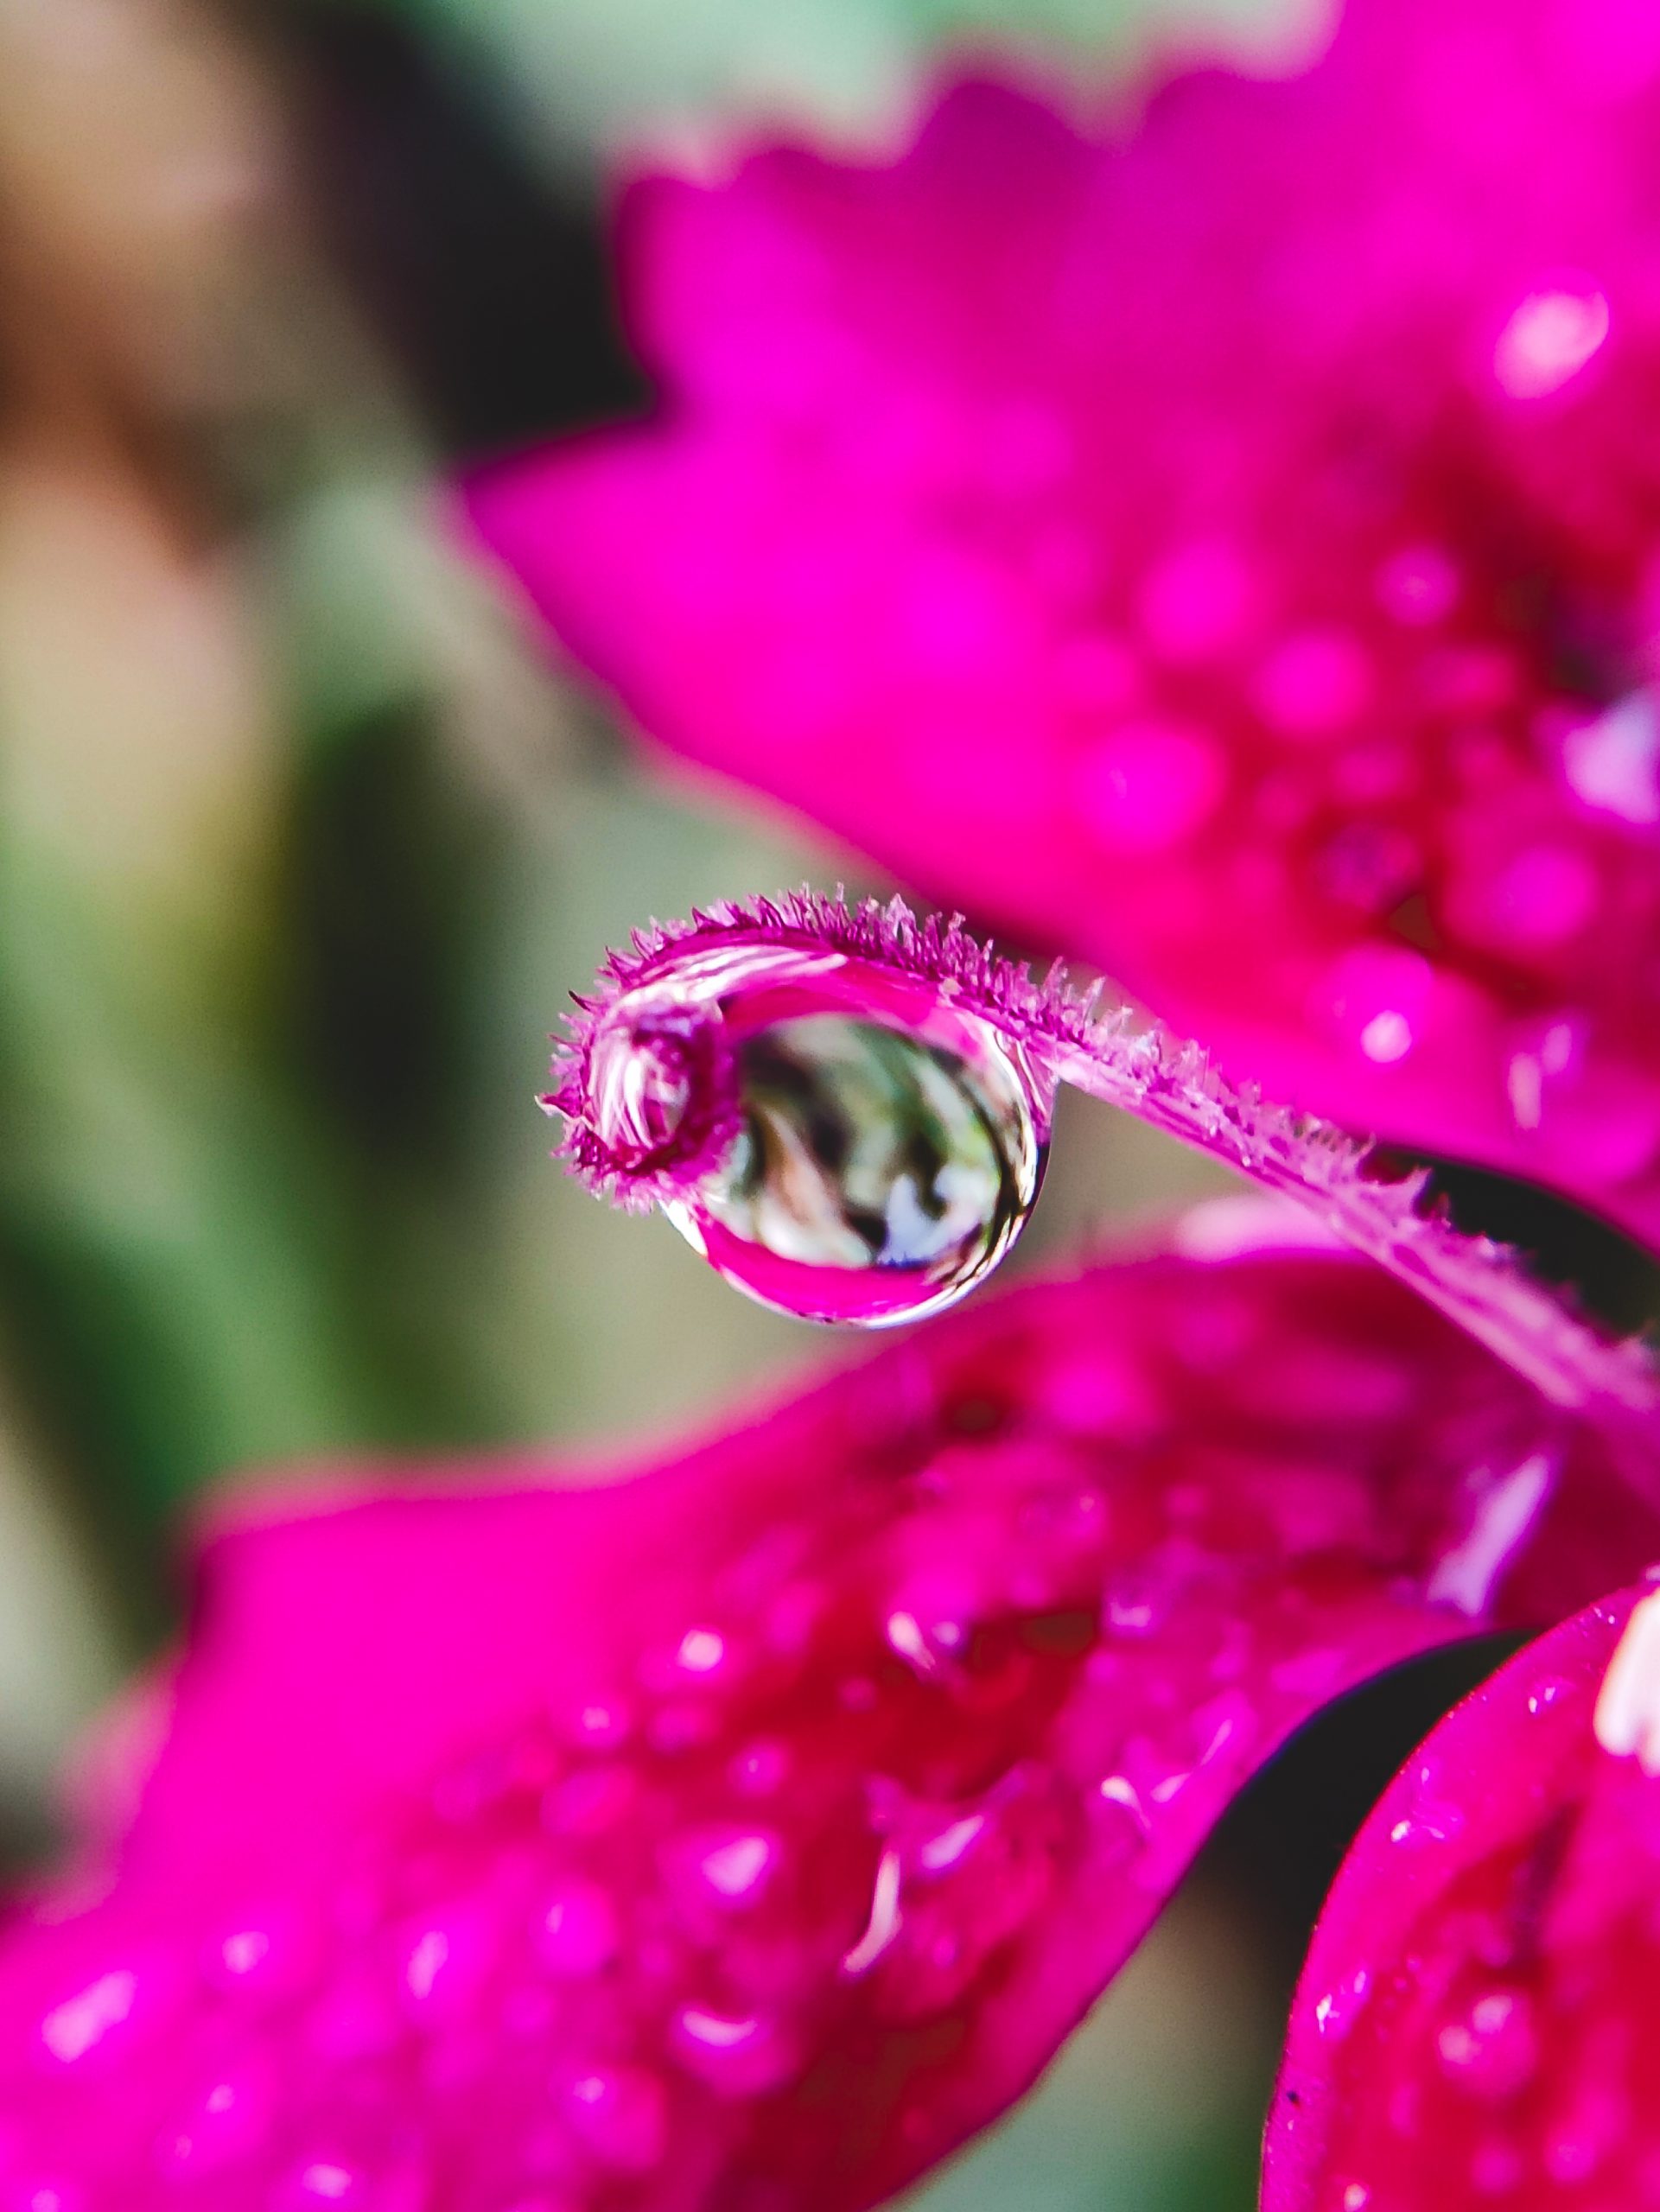 A little droplet on stigma flower